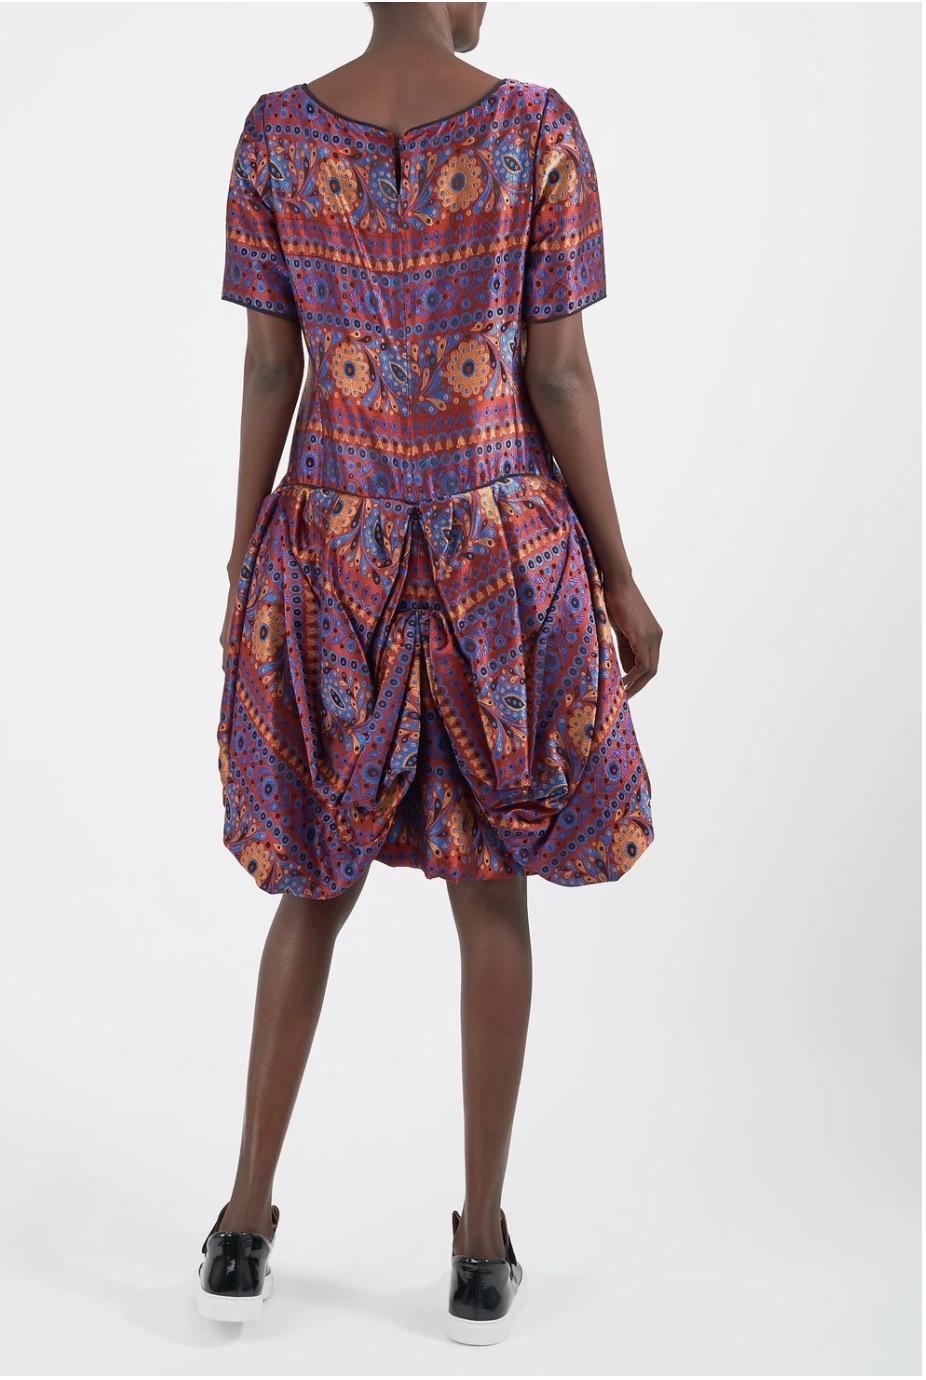 Women's 1980s Yves Saint Laurent Rive Gauche Embroidered Dress